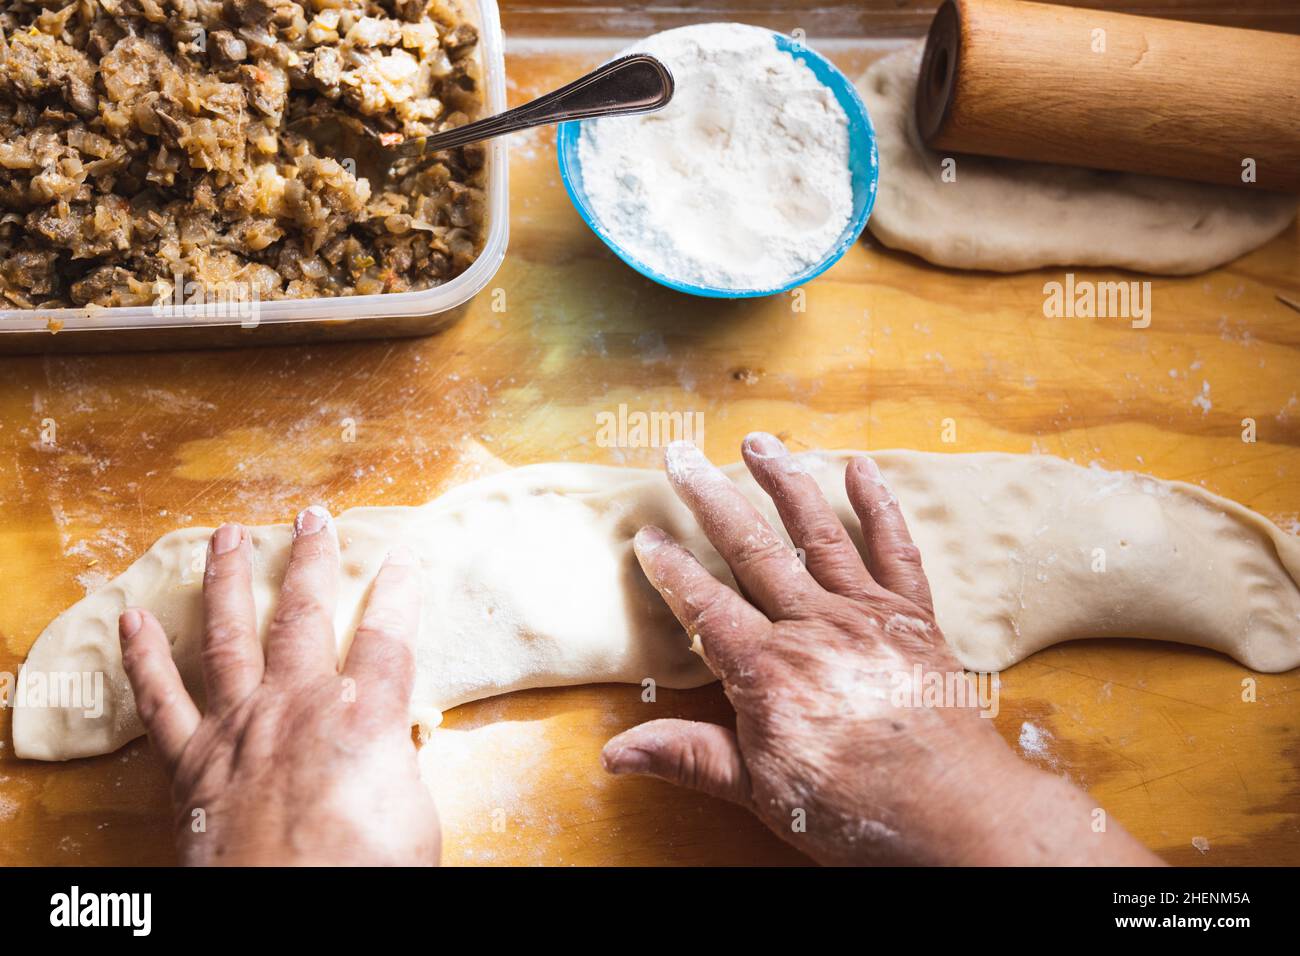 Old woman's hands kneading bread dough. Empanadas. Wooden table. Stock Photo